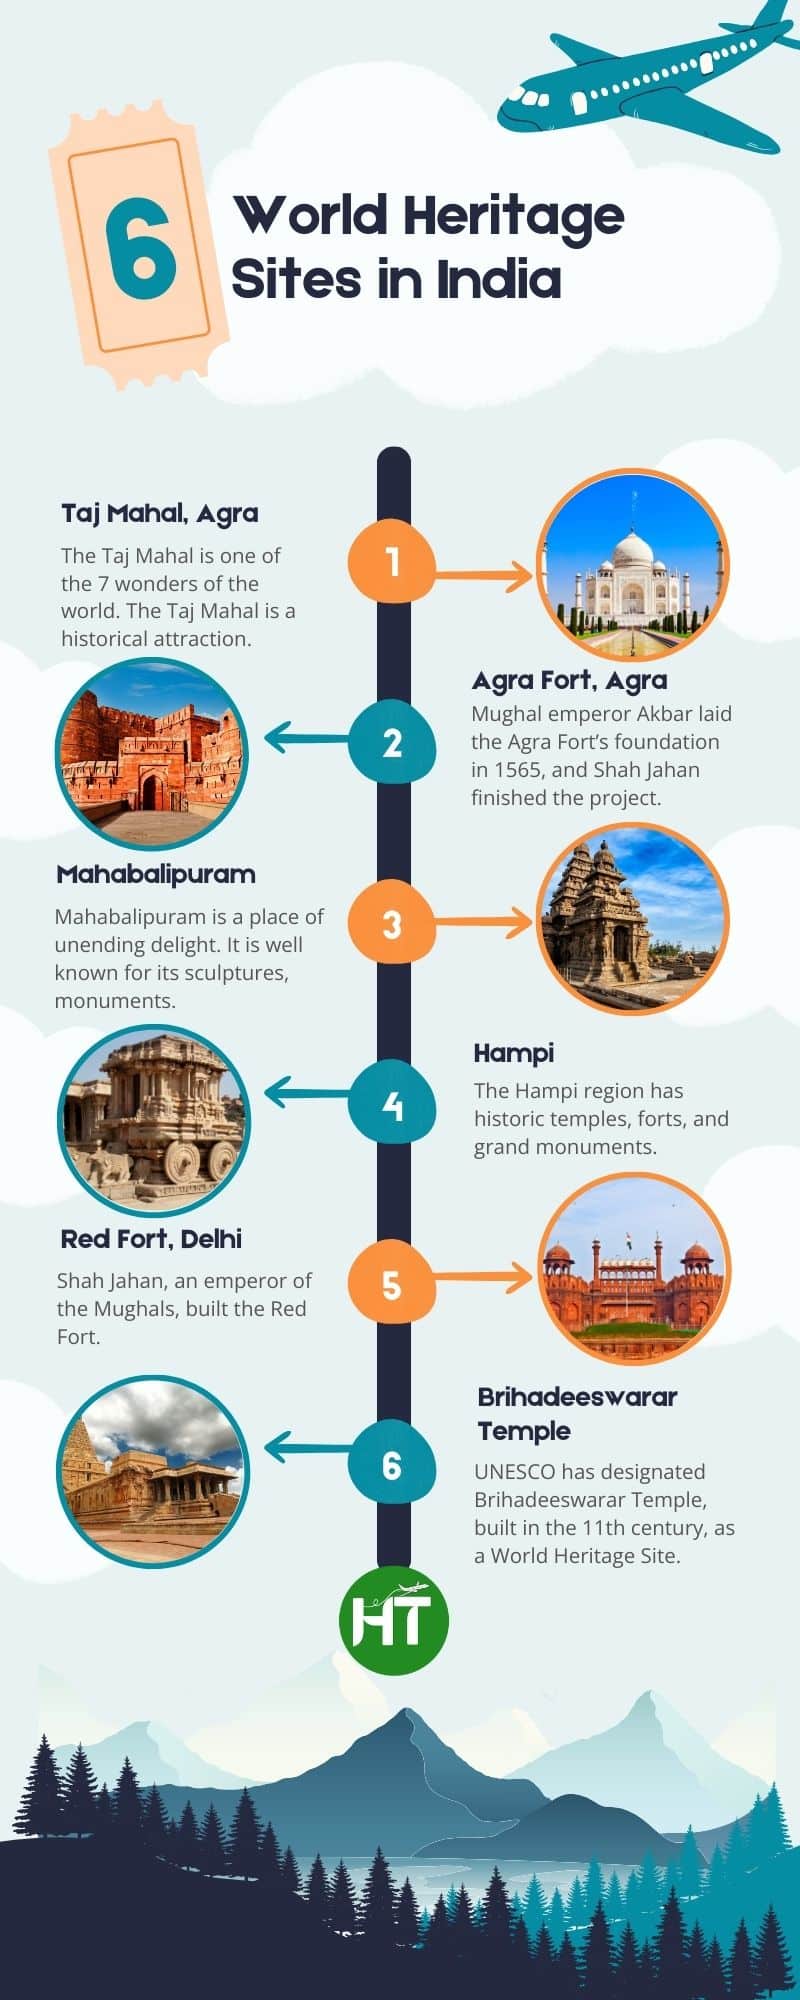 World heritage sites in India